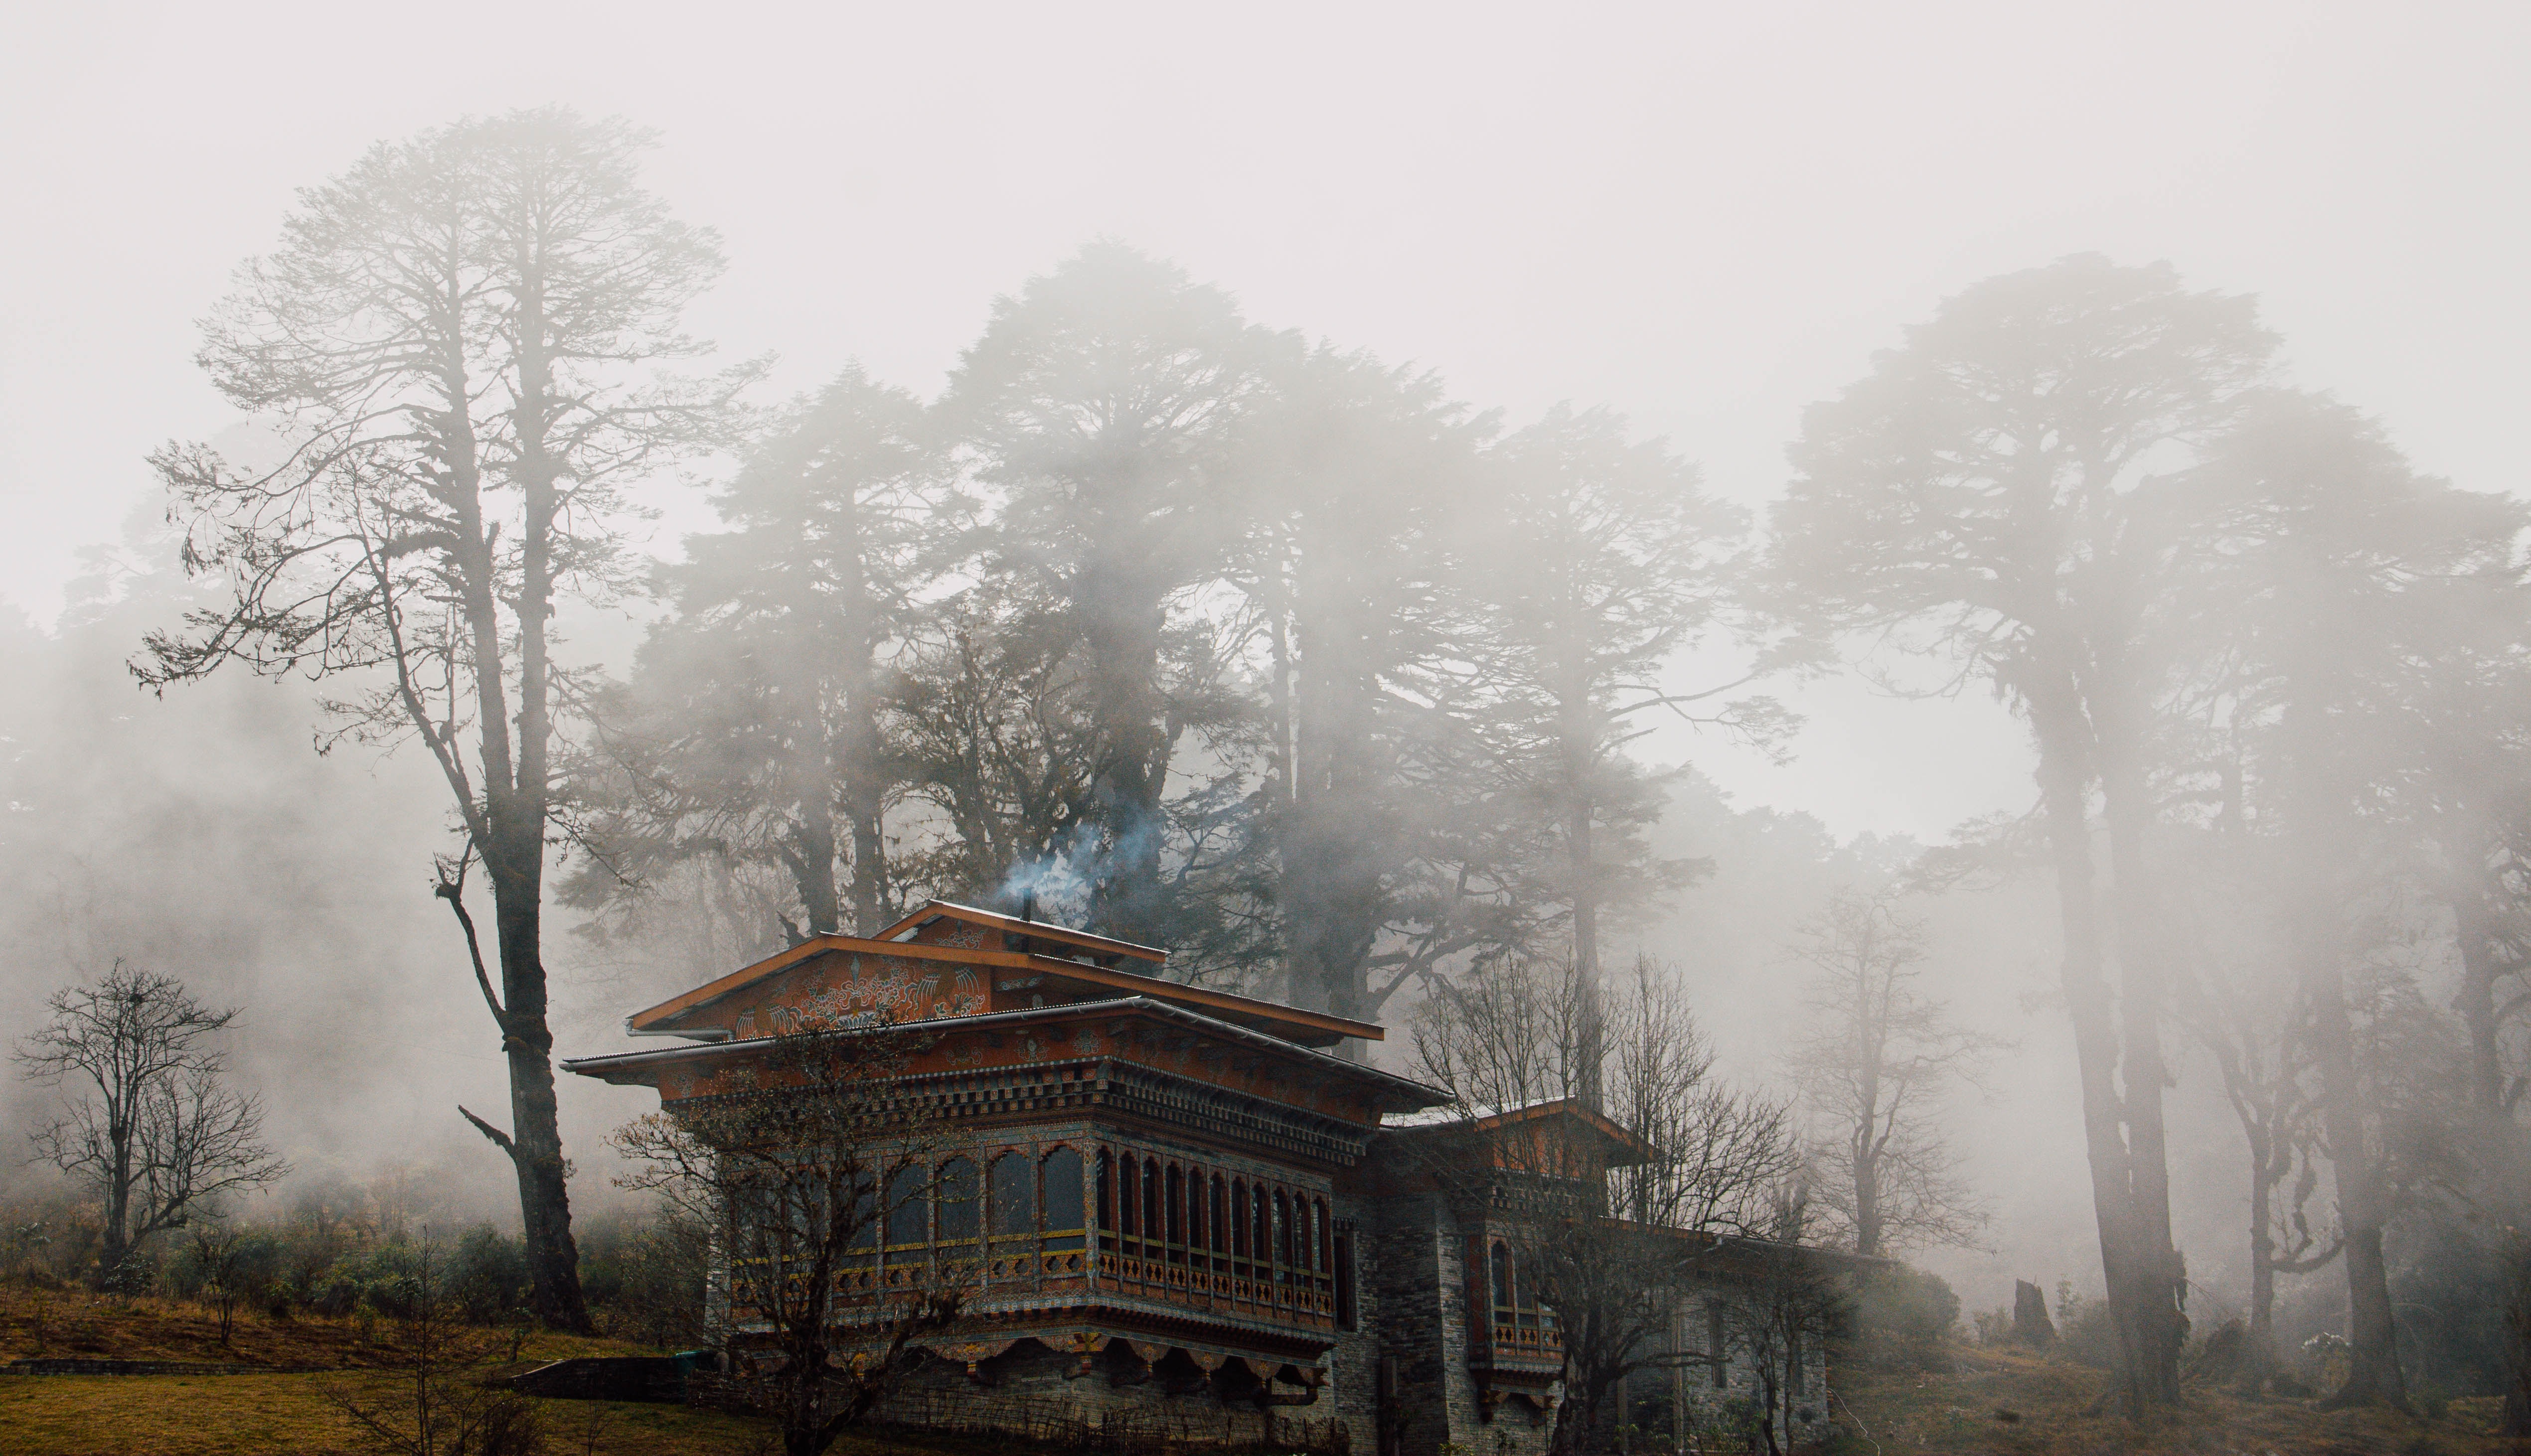 Bhutan in March - Explore the Paradise